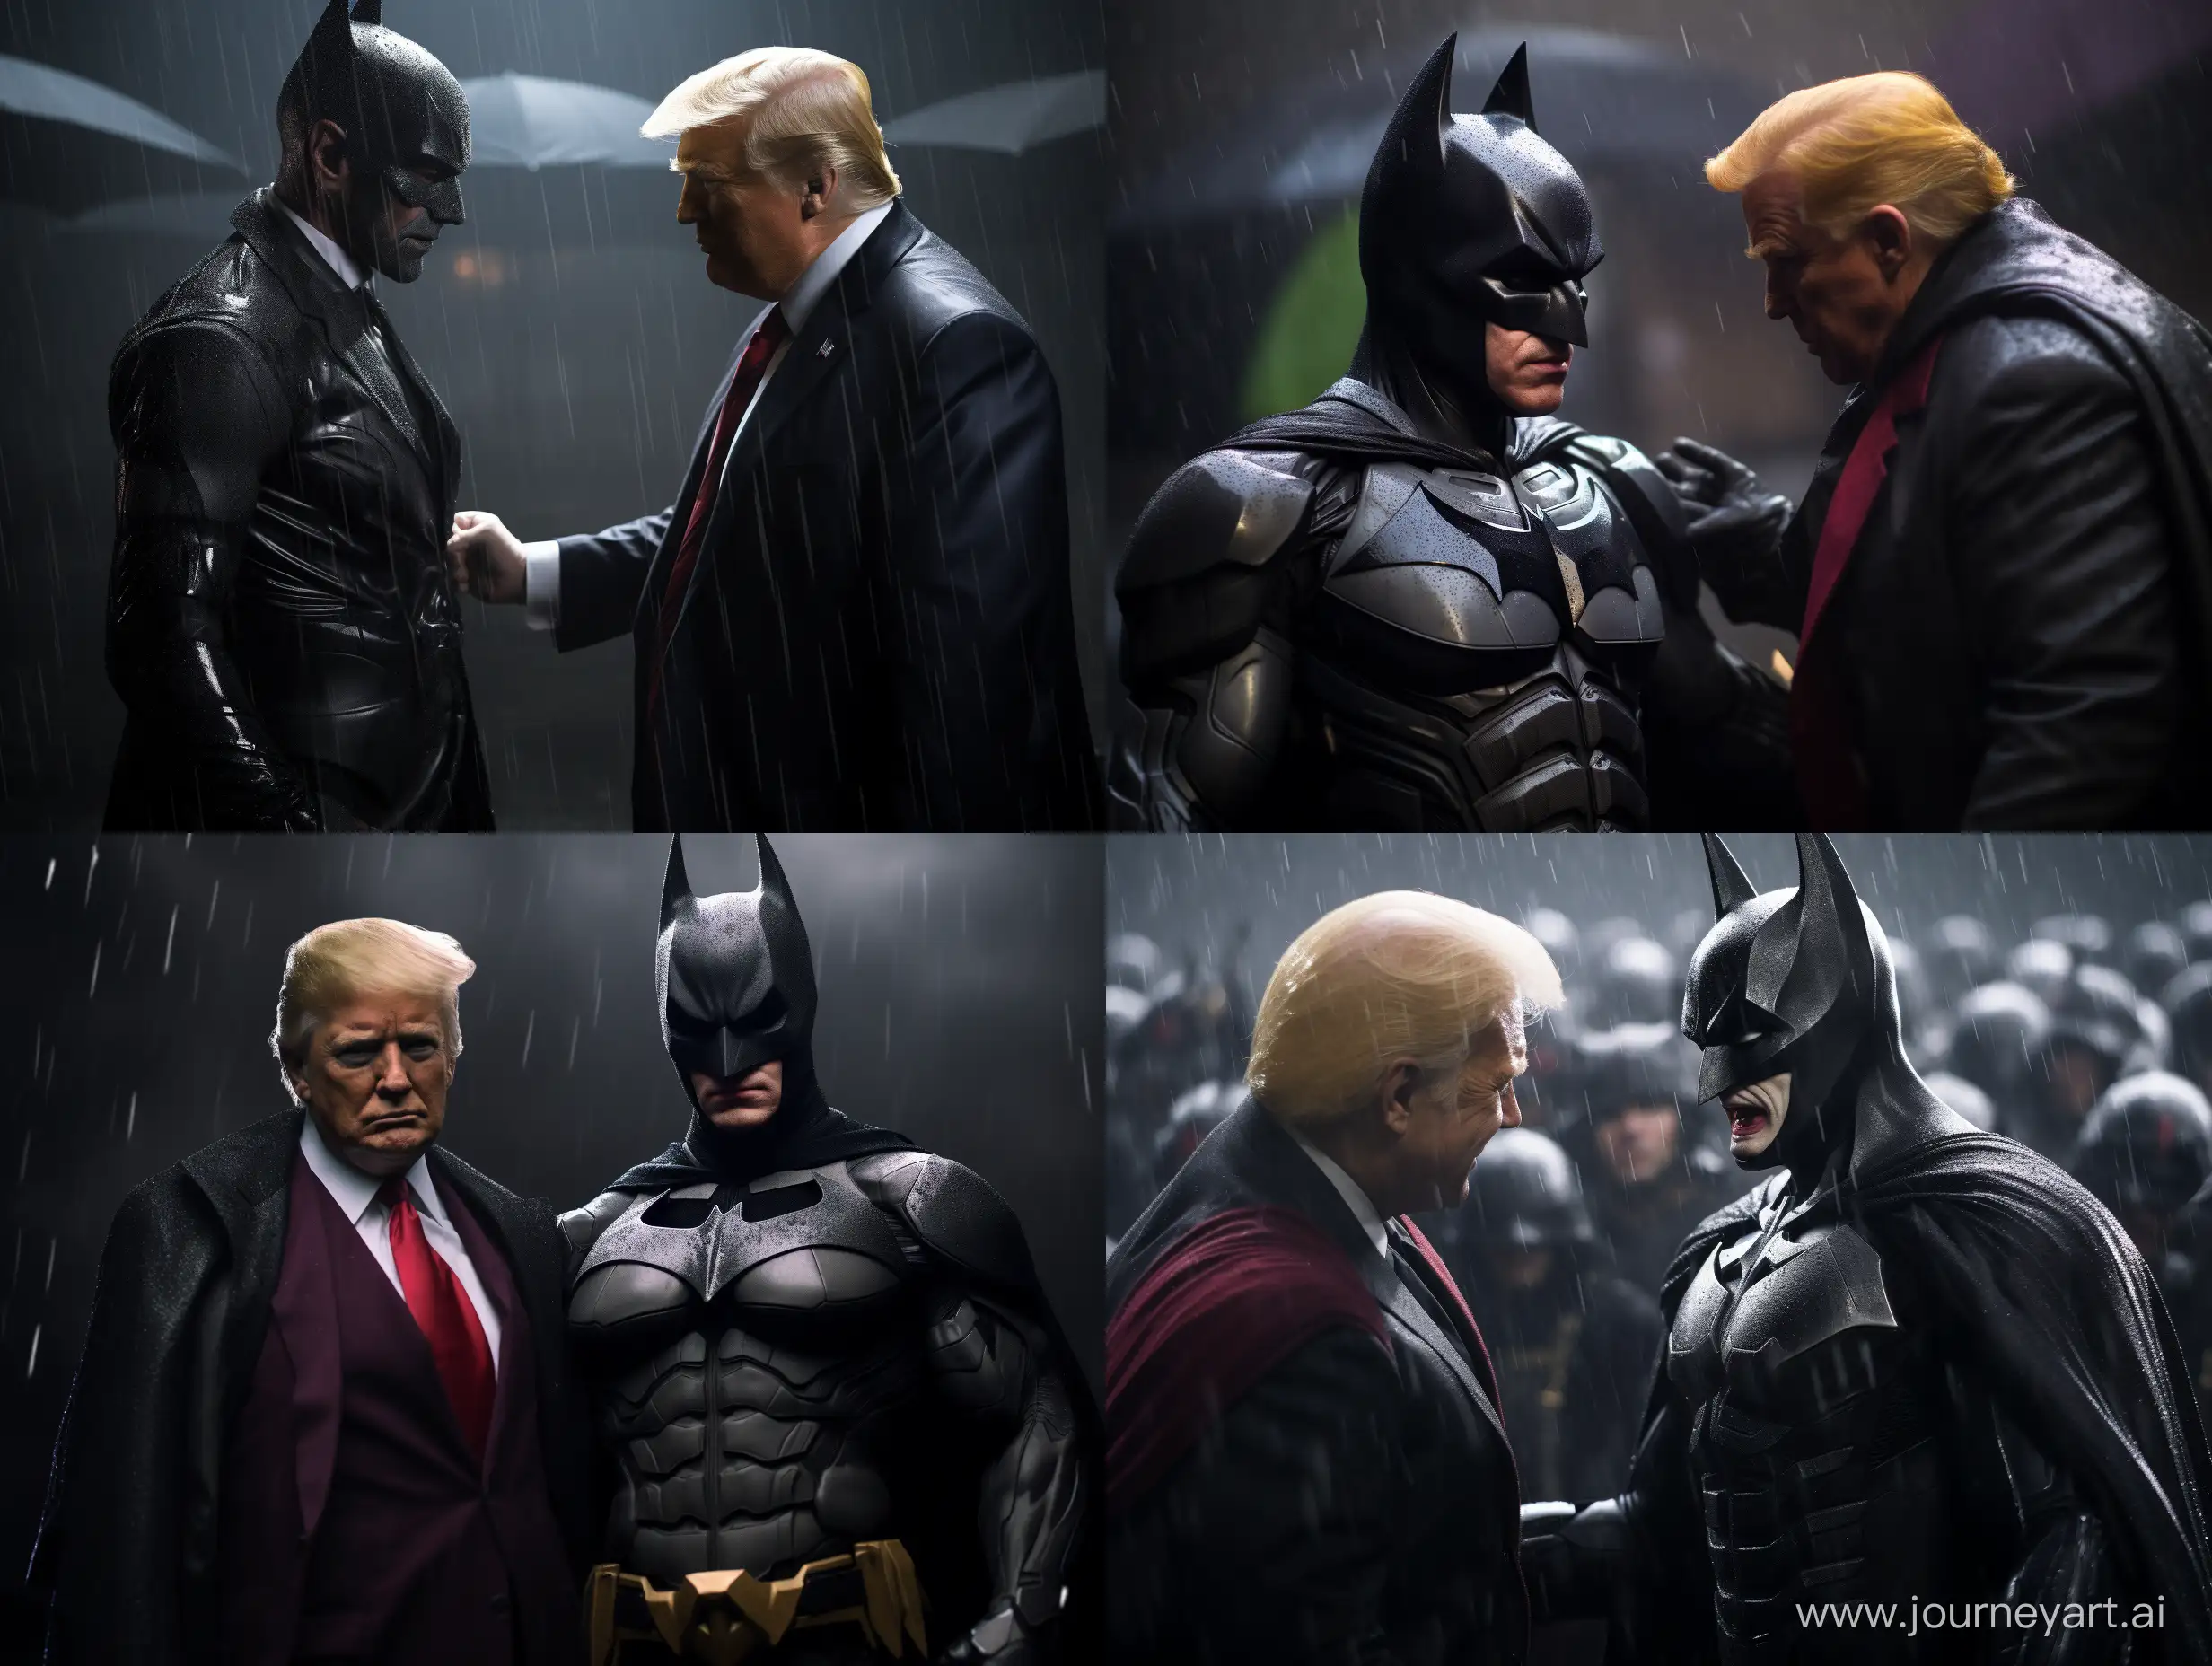 Trump-as-Batman-Confronts-Biden-as-Joker-in-Rainy-Showdown